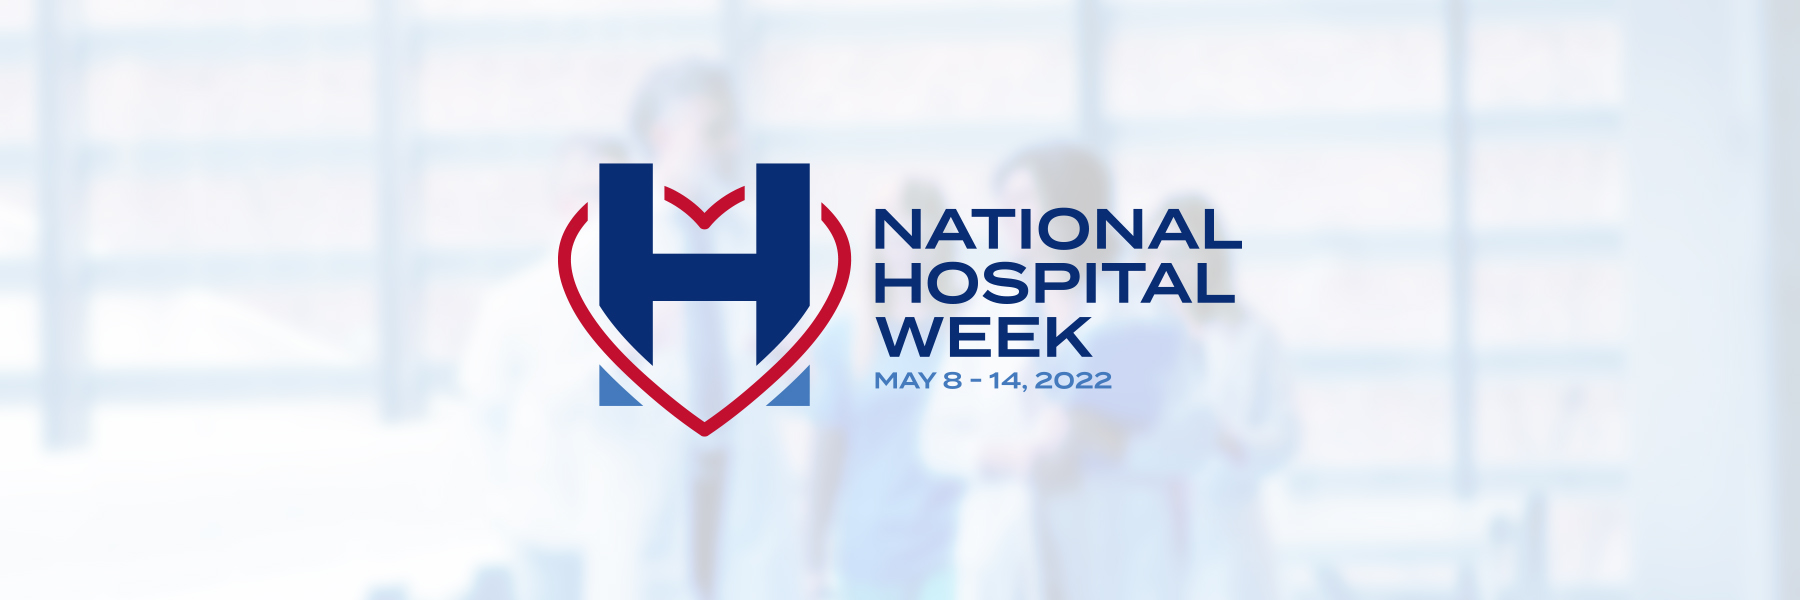 National Hospital Week Tennessee Hospital Association